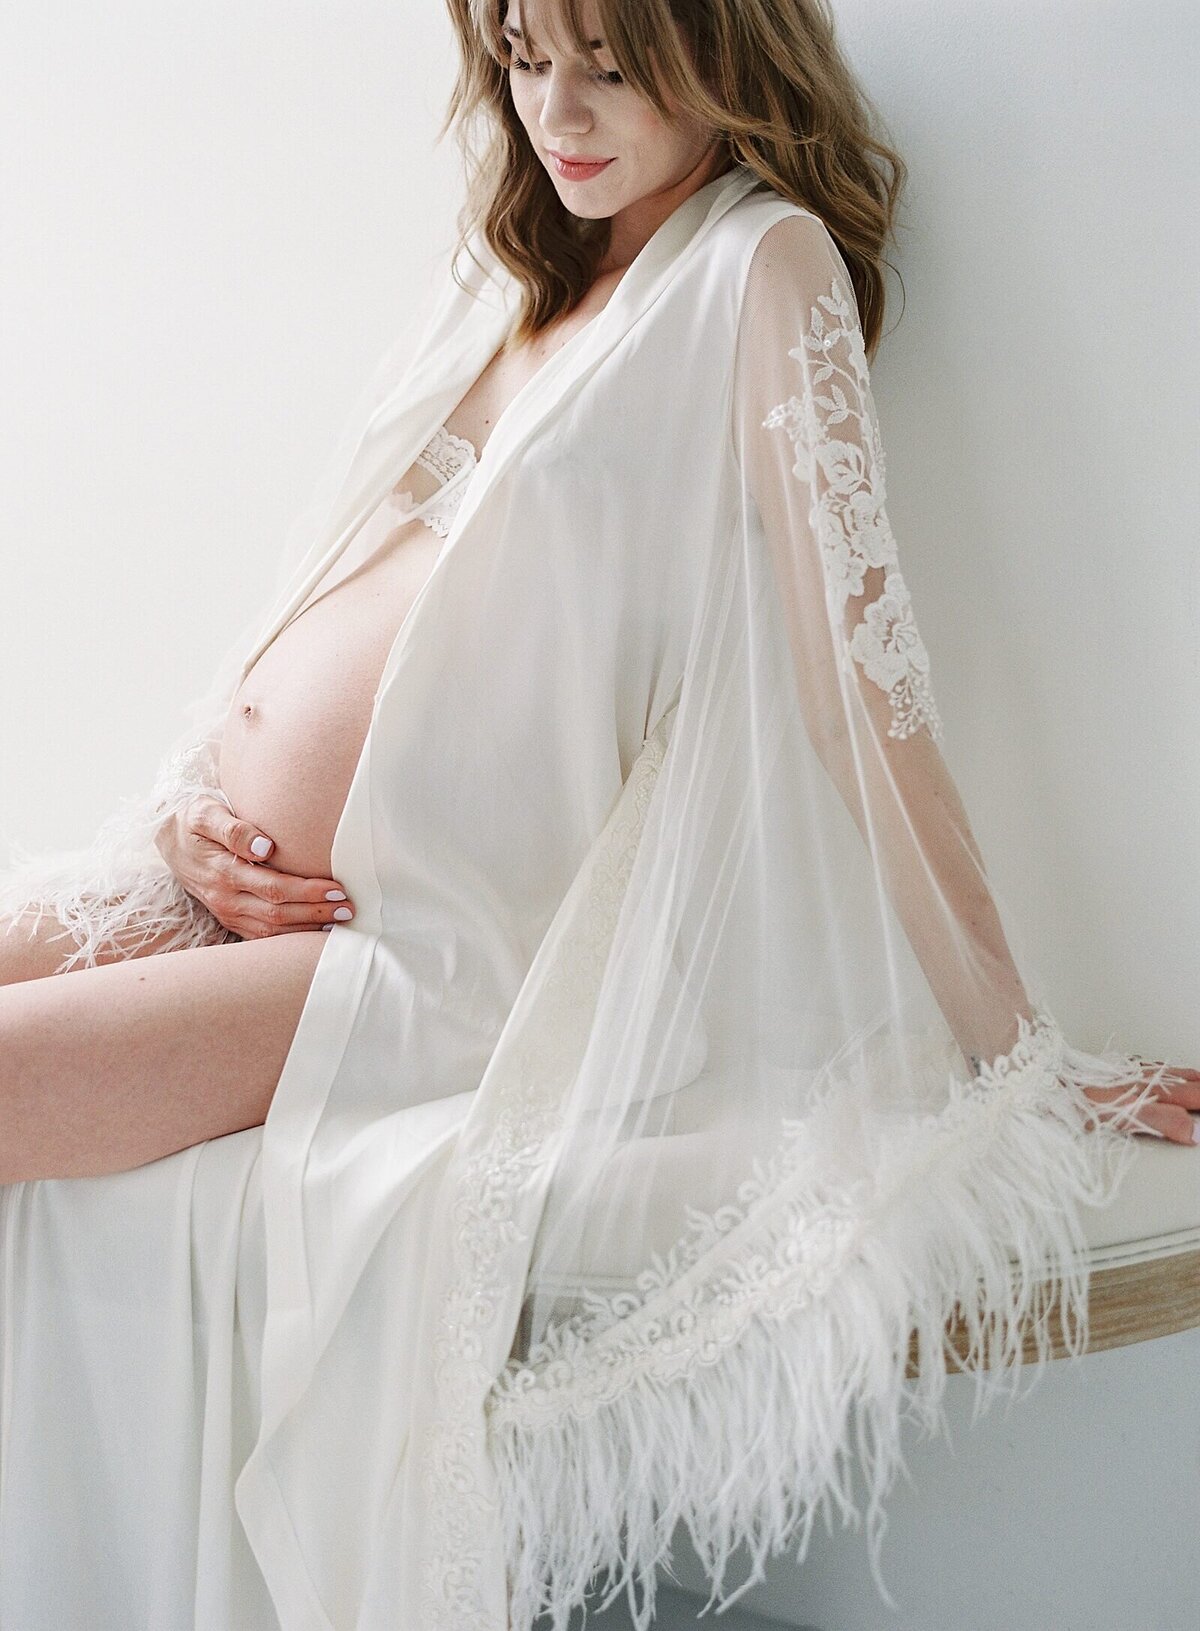 seattle-maternity-photographer-jacqueline-benet_0010